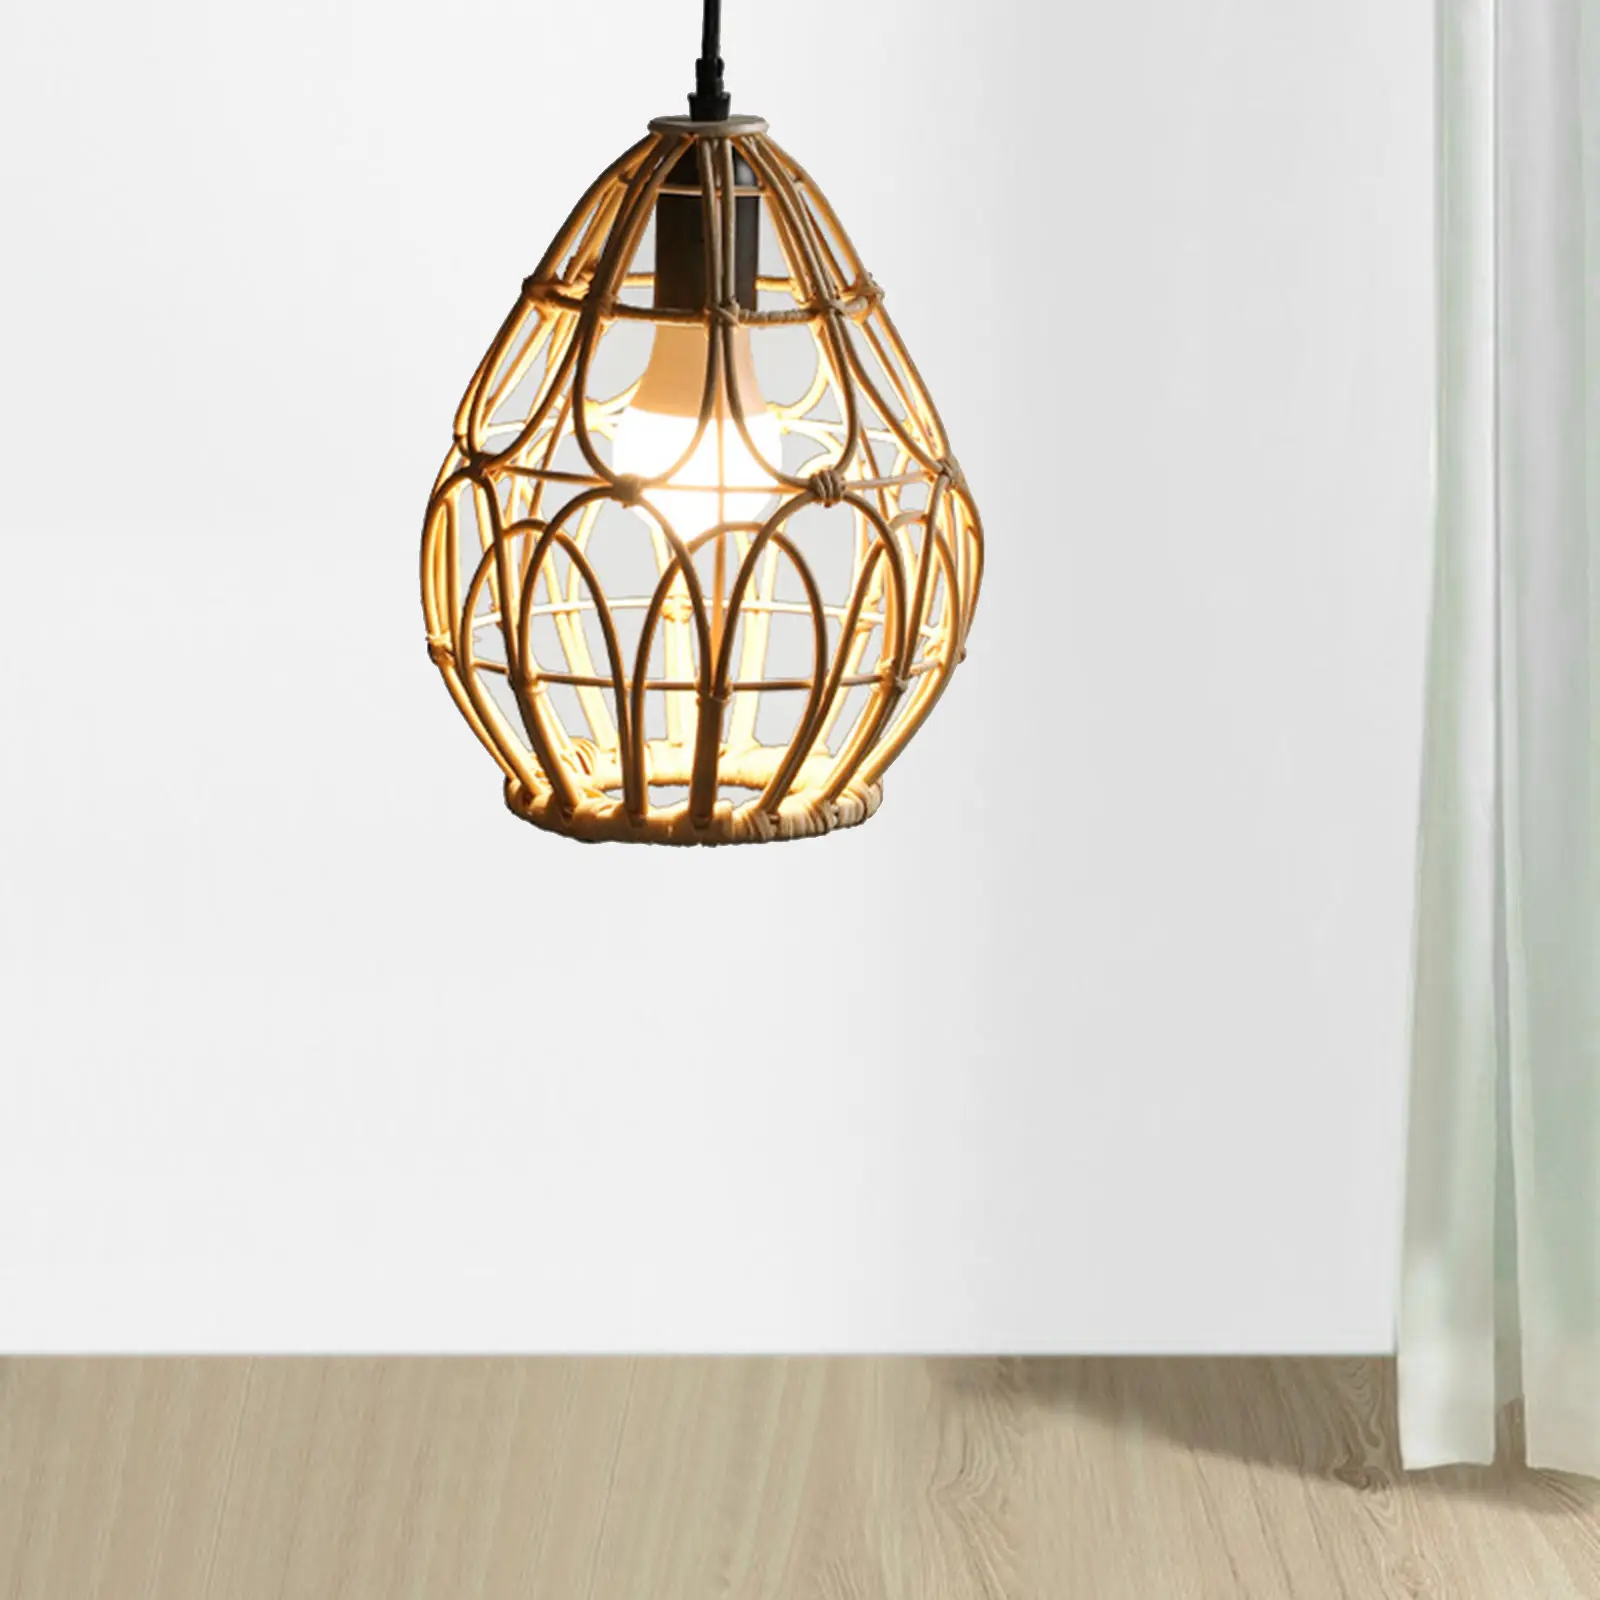 Chandelier Handwoven Rattan Pendant Light Lamp Shade Ceiling Light Fixture Weave